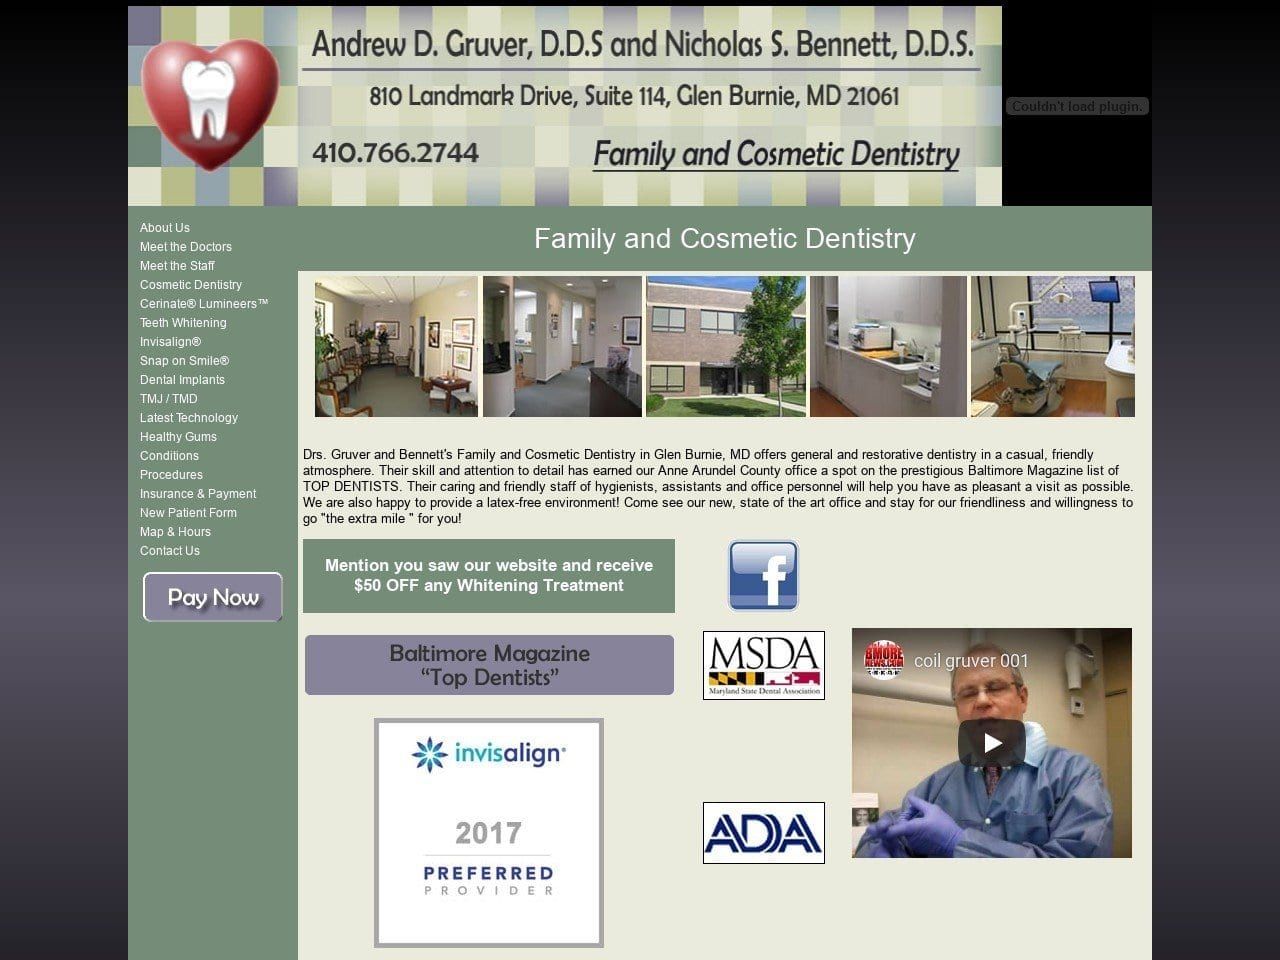 Andrew D Gruver Dentist Website Screenshot from landmarksmiles.com